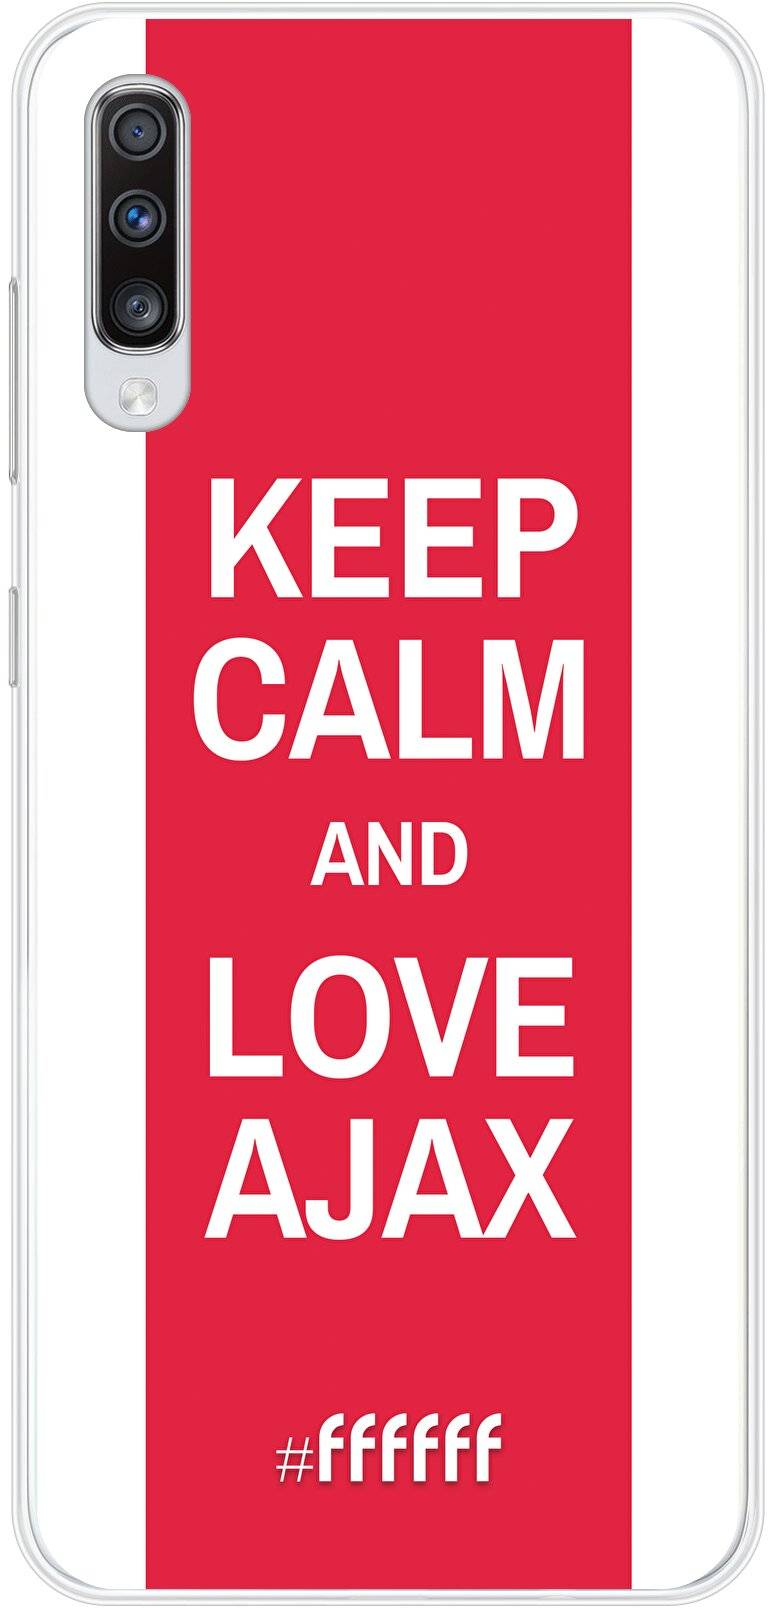 AFC Ajax Keep Calm Galaxy A70